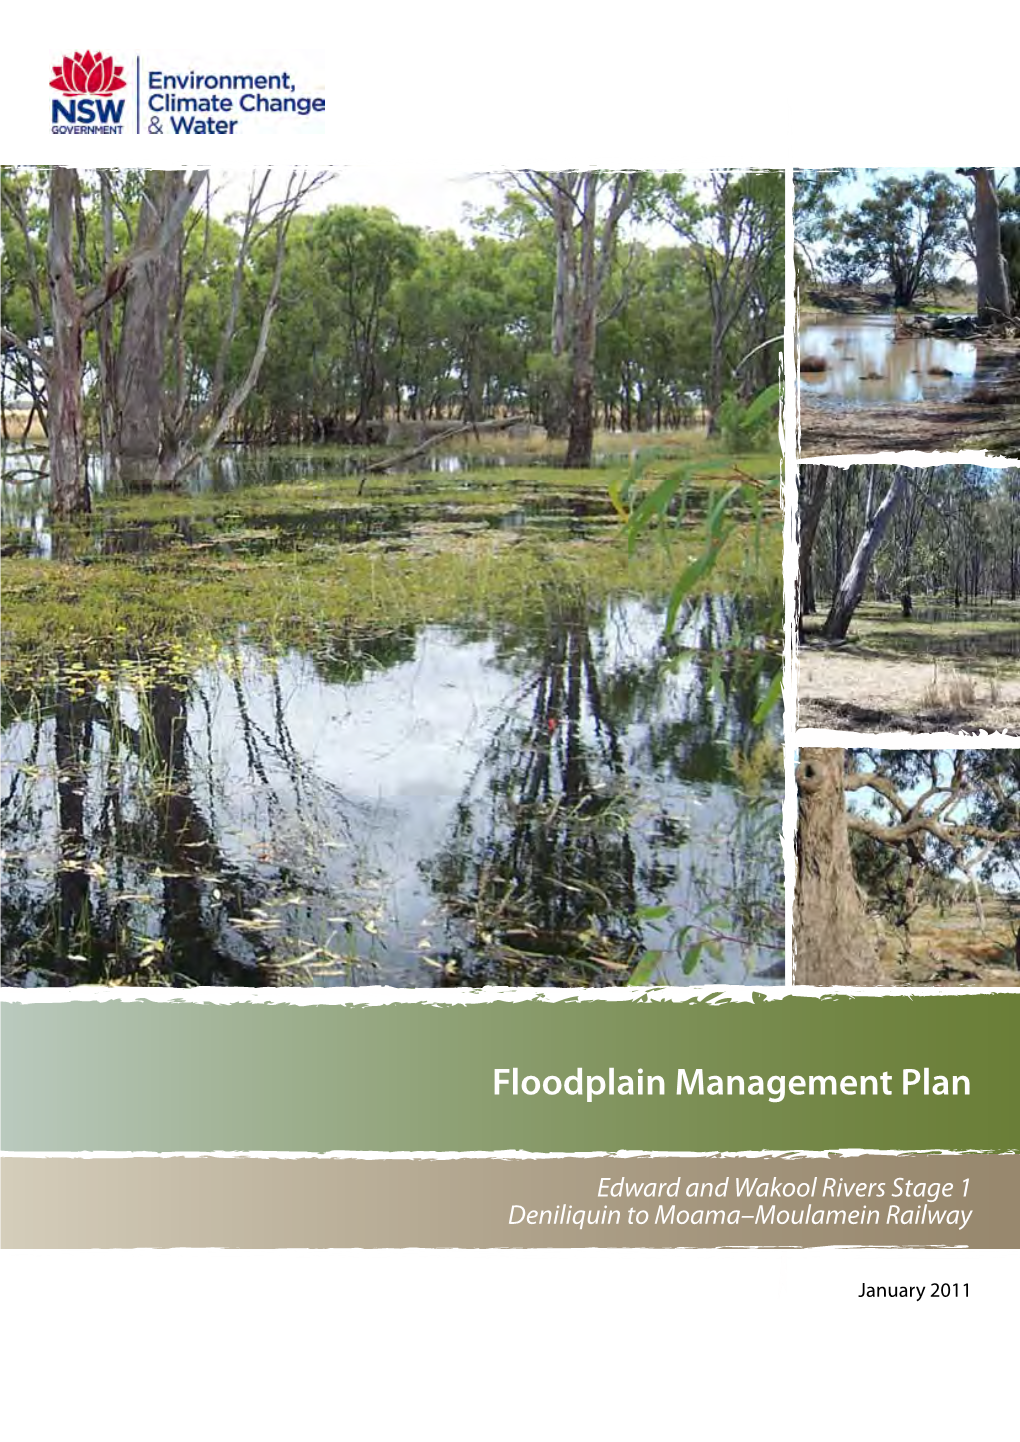 Edward and Wakool Rivers Stage 1 Floodplain Management Plan